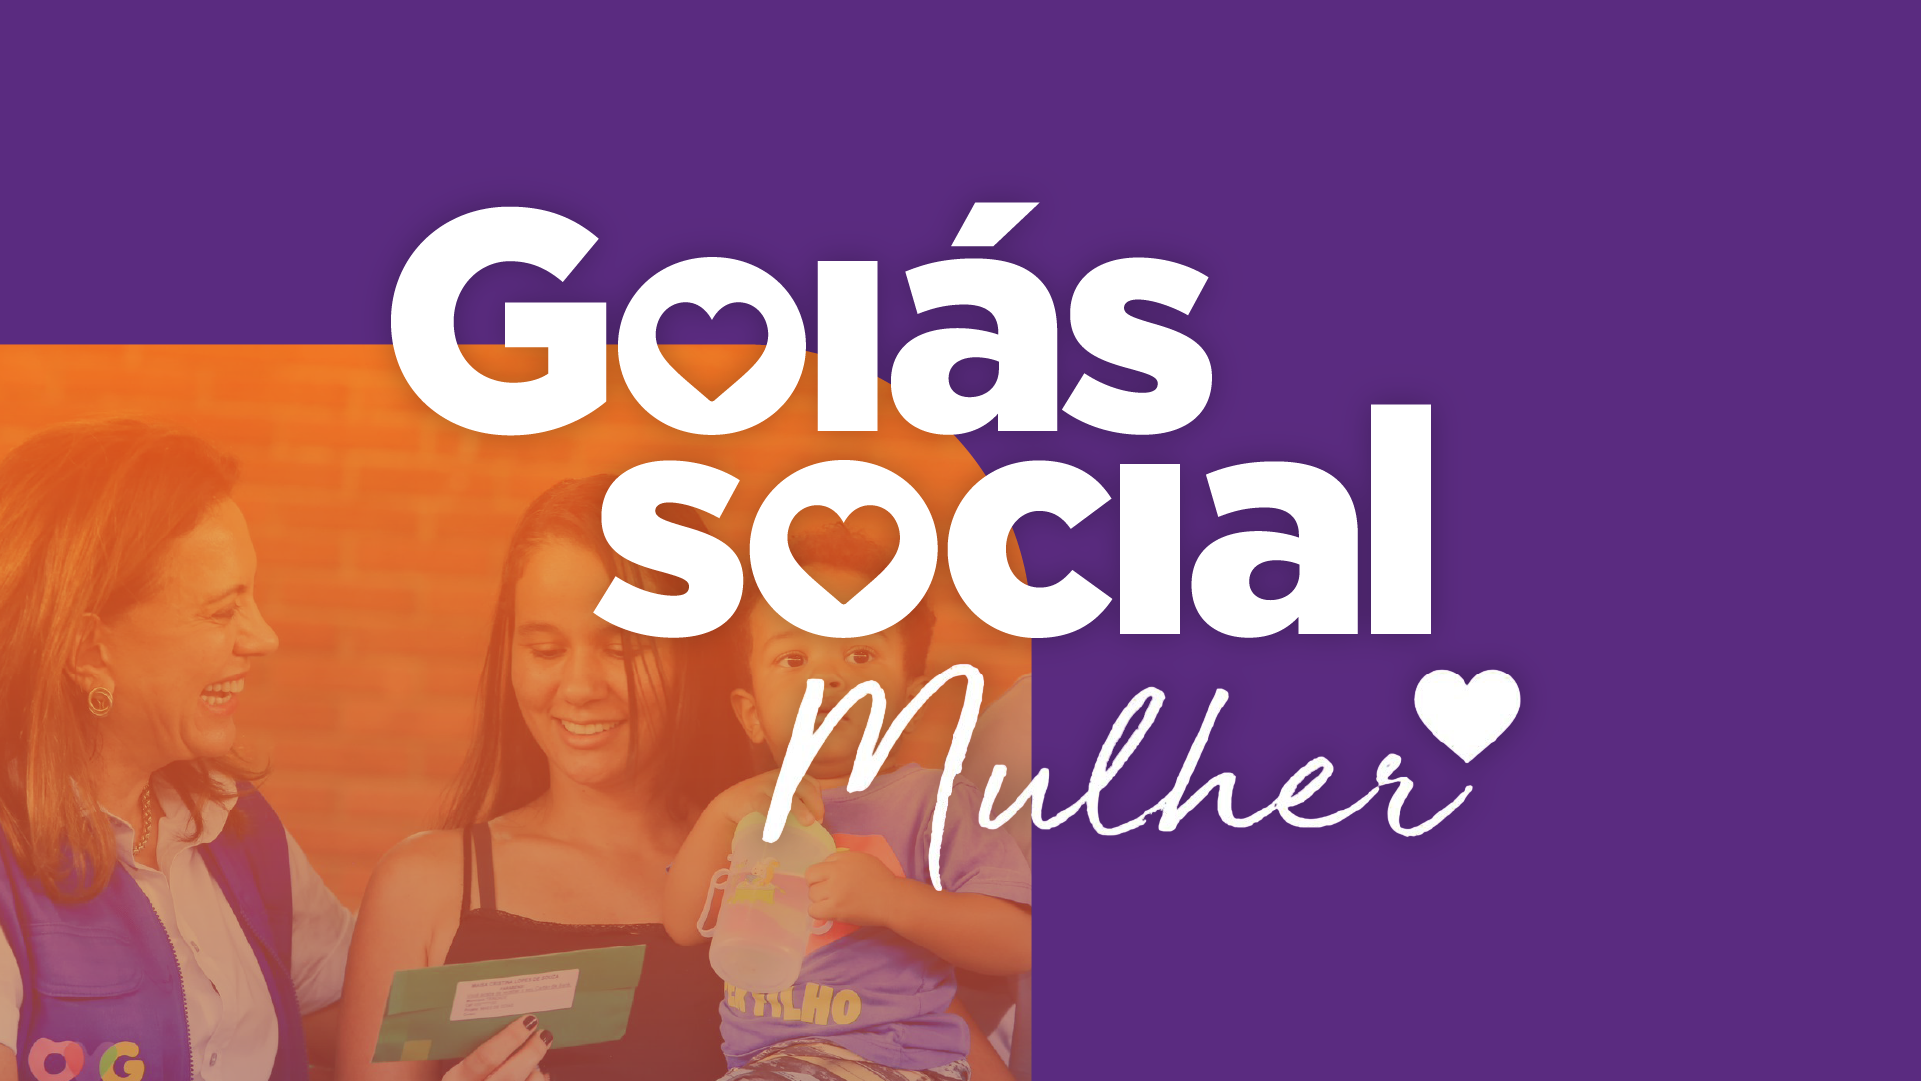 Goiás Social promove grande evento para mulheres a partir desta segunda